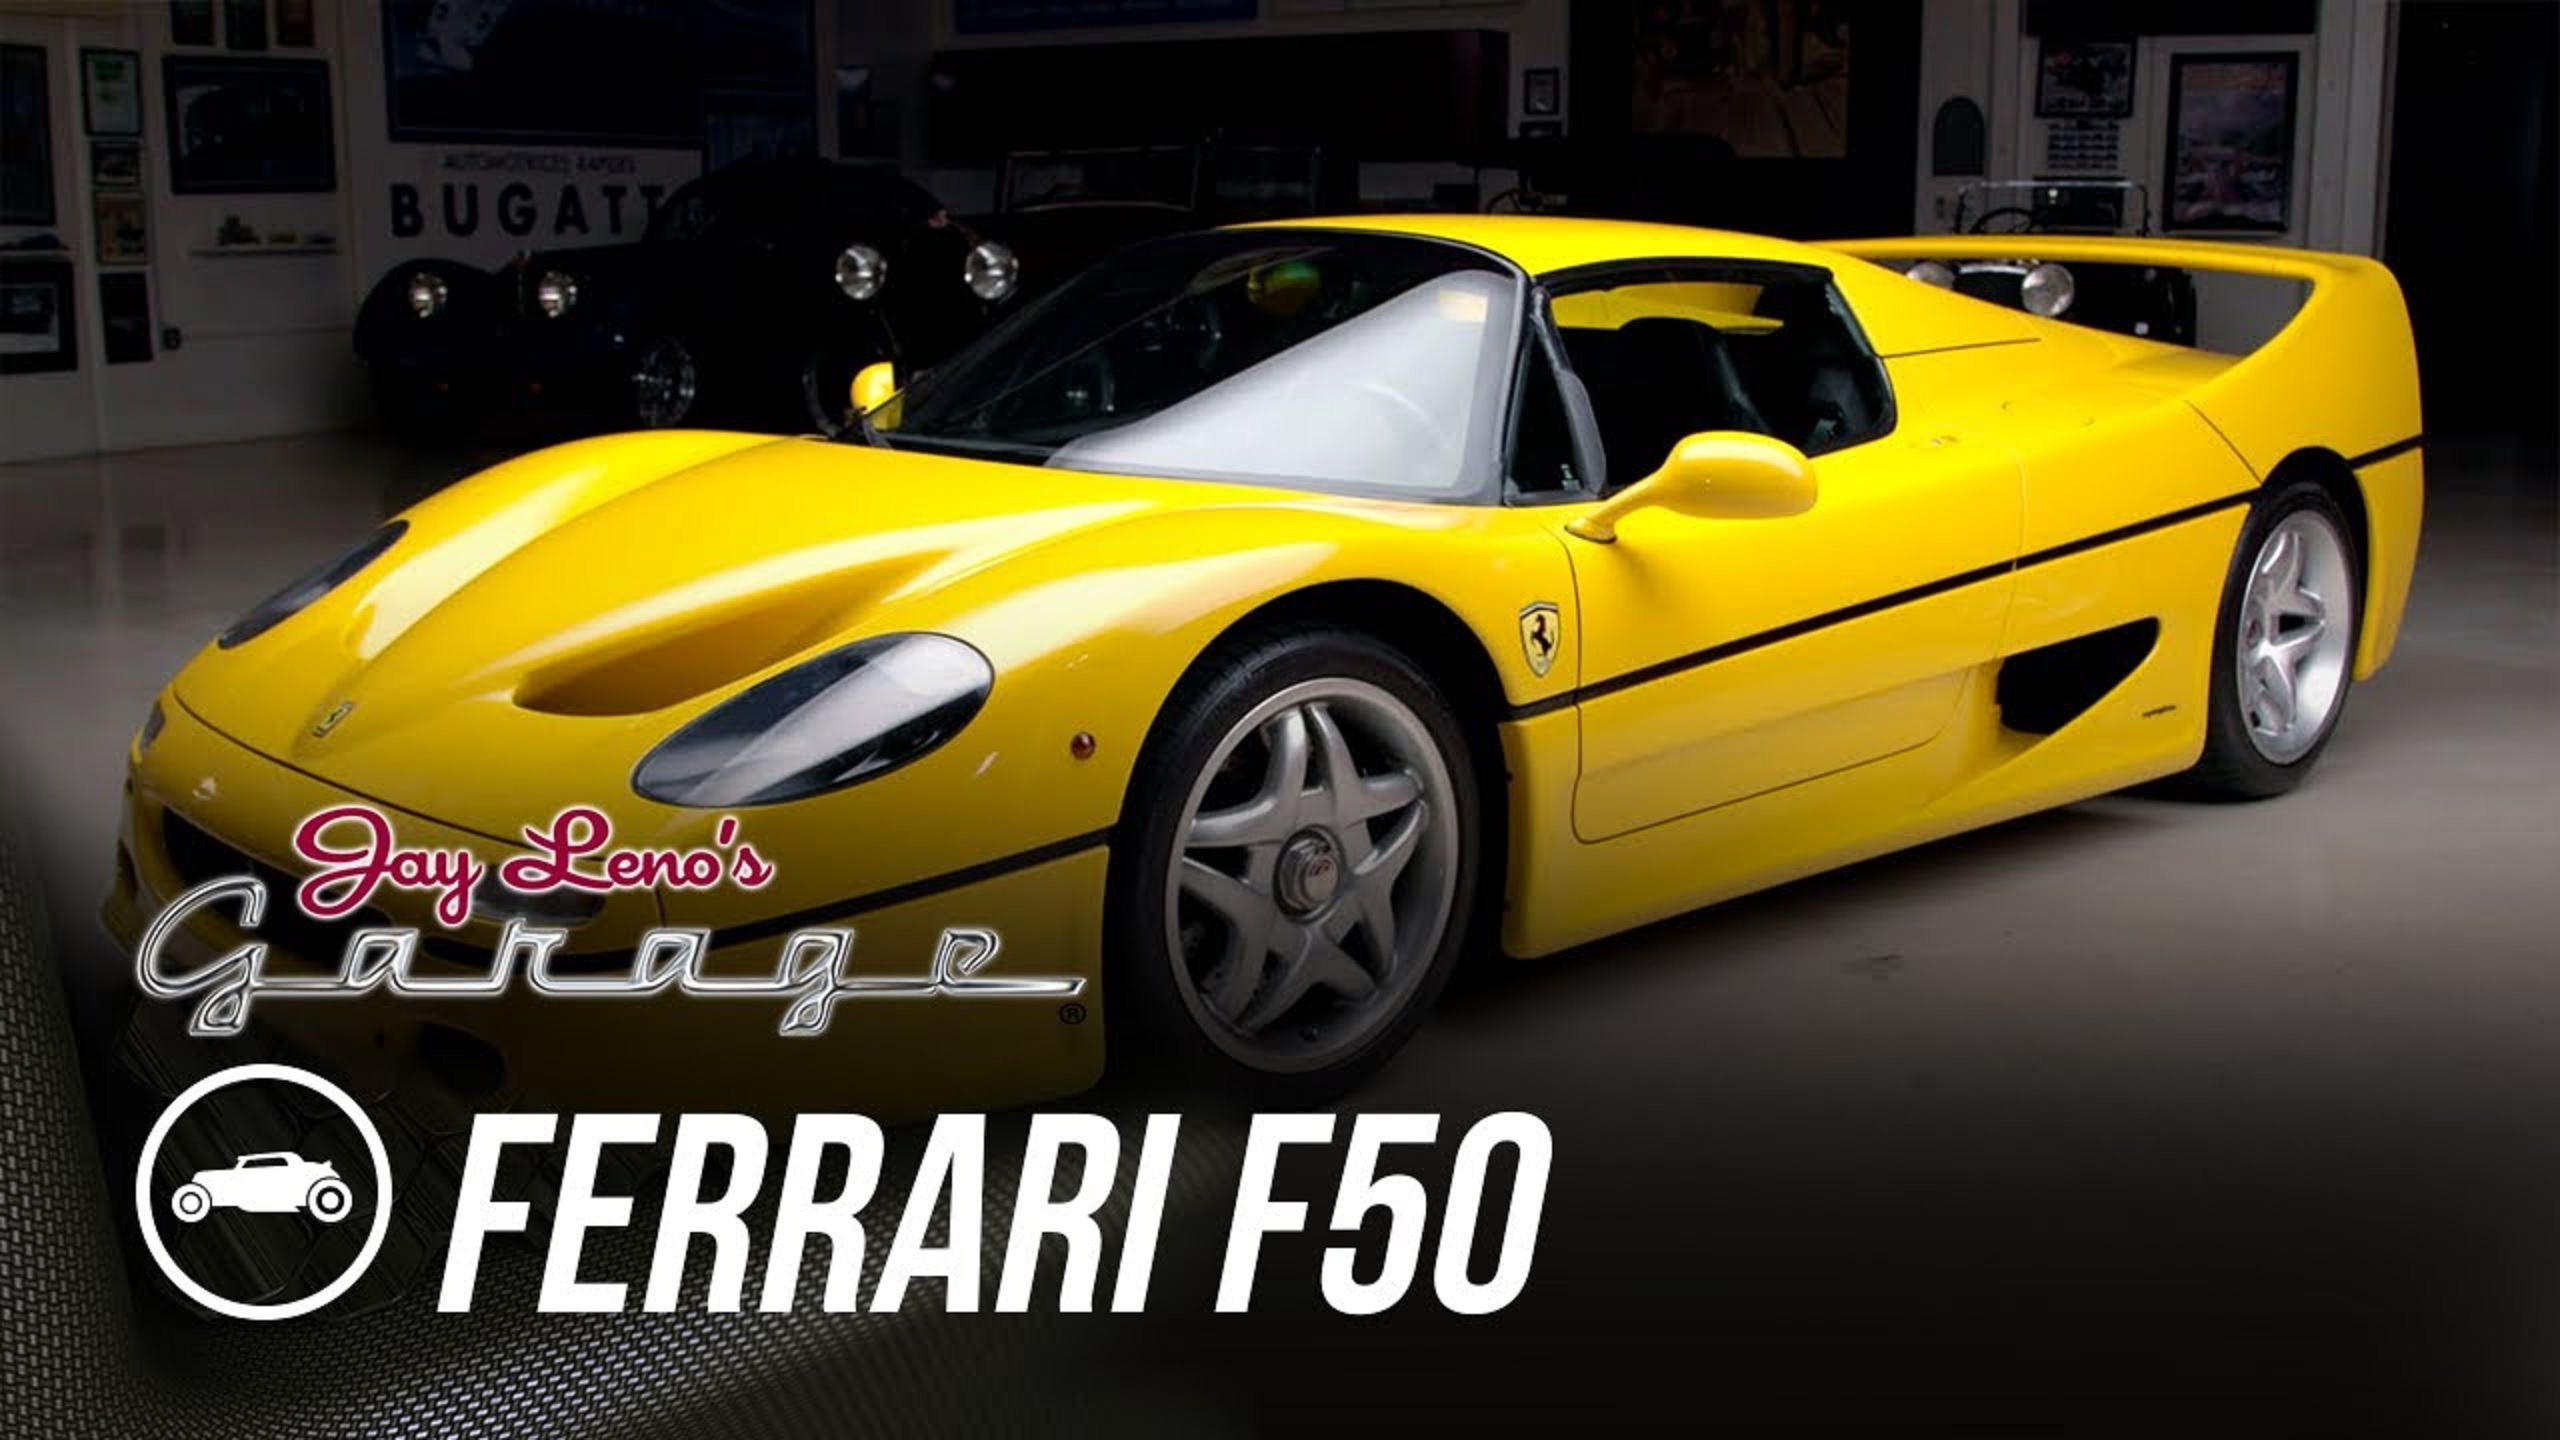 David Lee's yellow Ferrari F50 in Jay Leno's garage